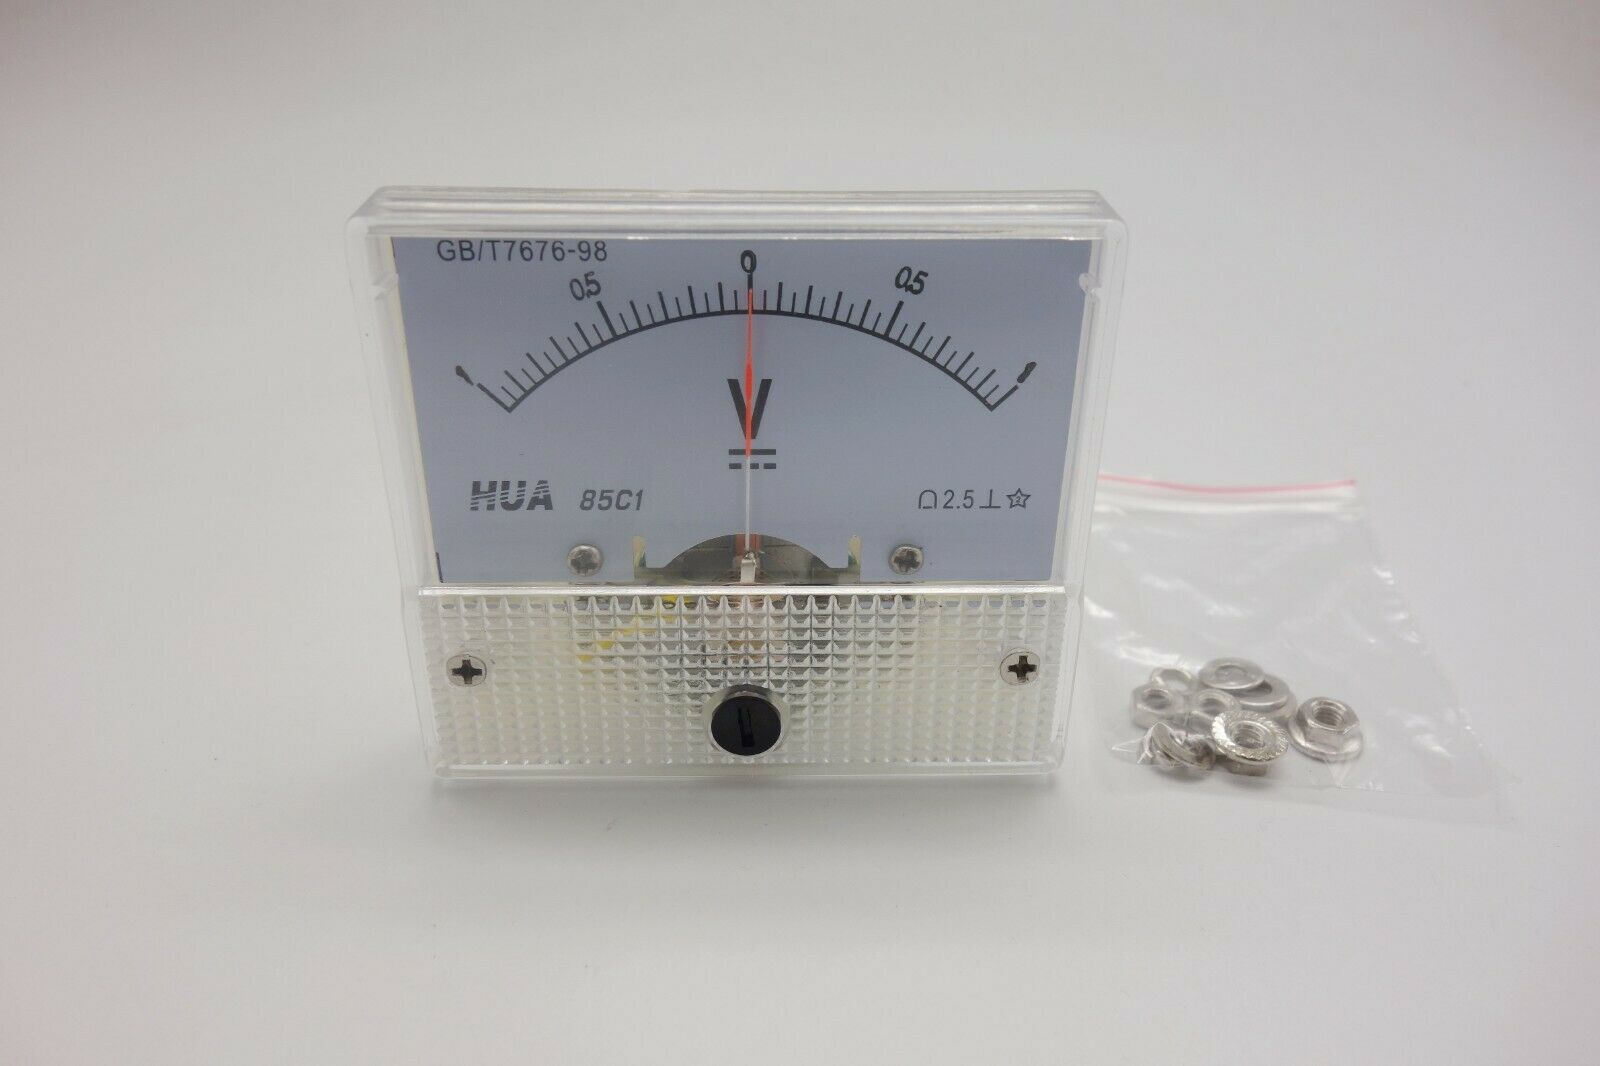 DC Minus Zero Plus -1V - 0 +1V Analog 85C1 56*64mm Voltage Analogue Panel meter